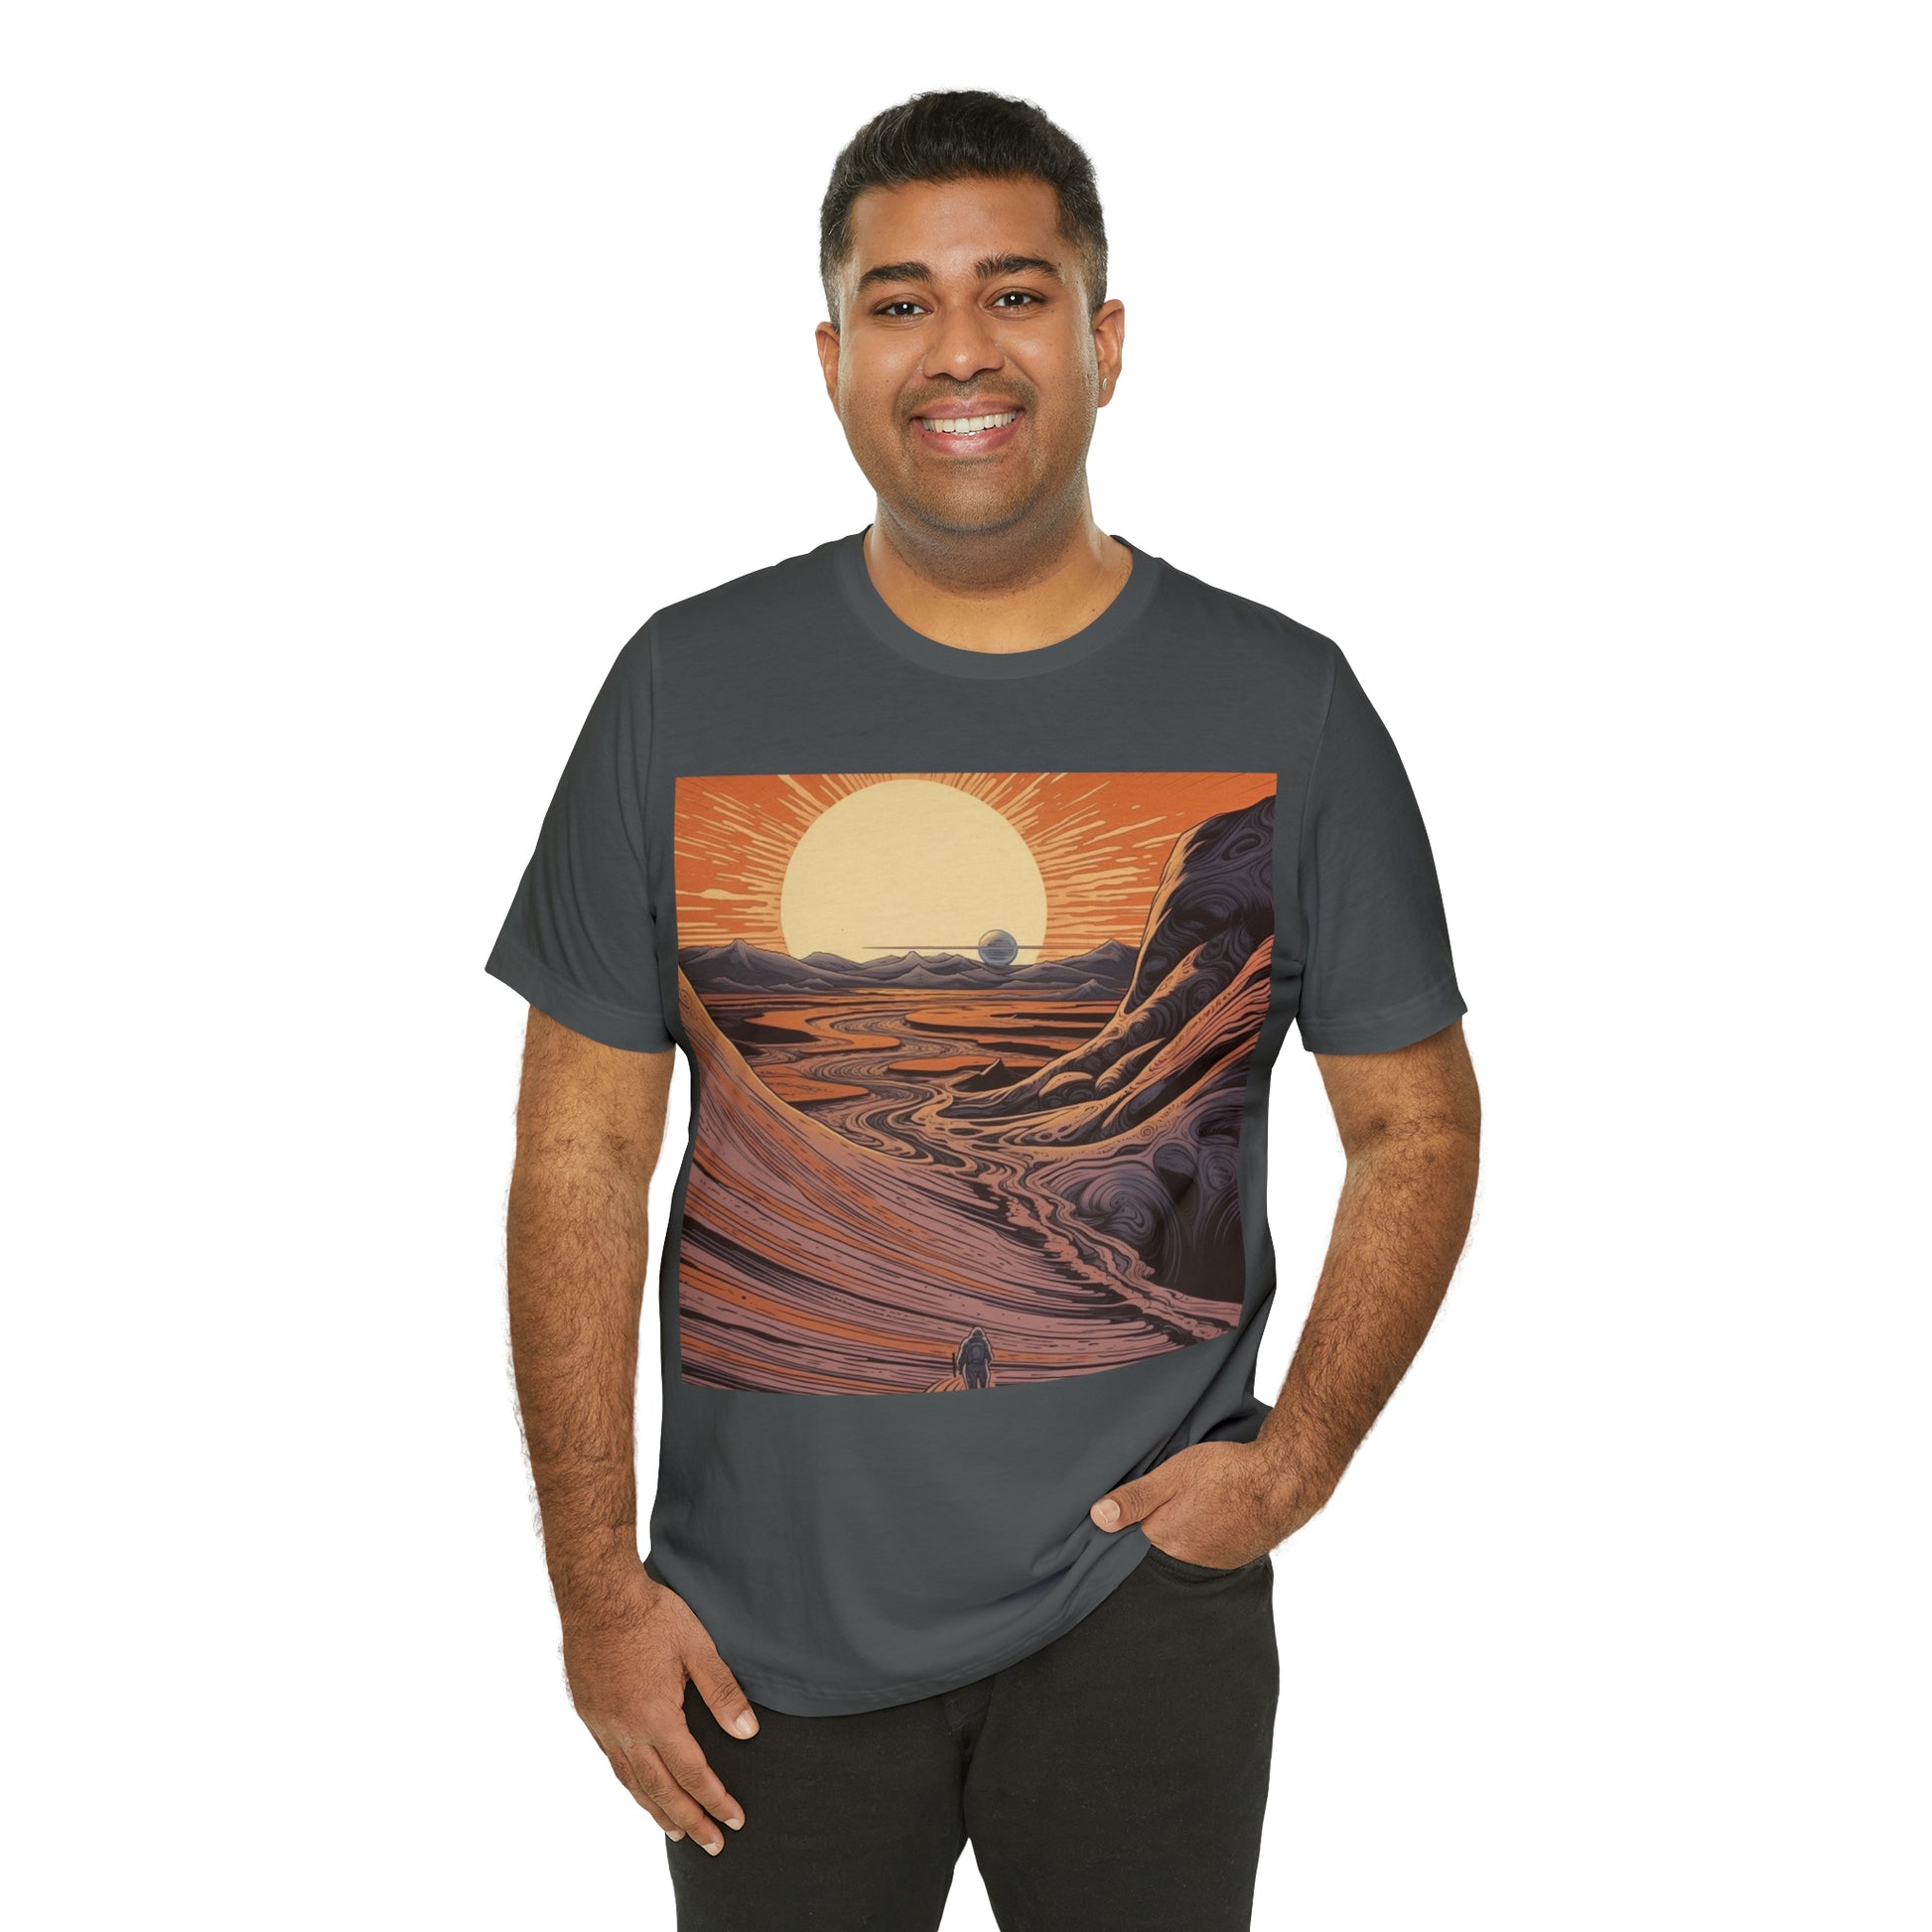 asphalt-quest-thread-tee-shirt-with-large-sunrise-over-dunes-on-center-of-shirt